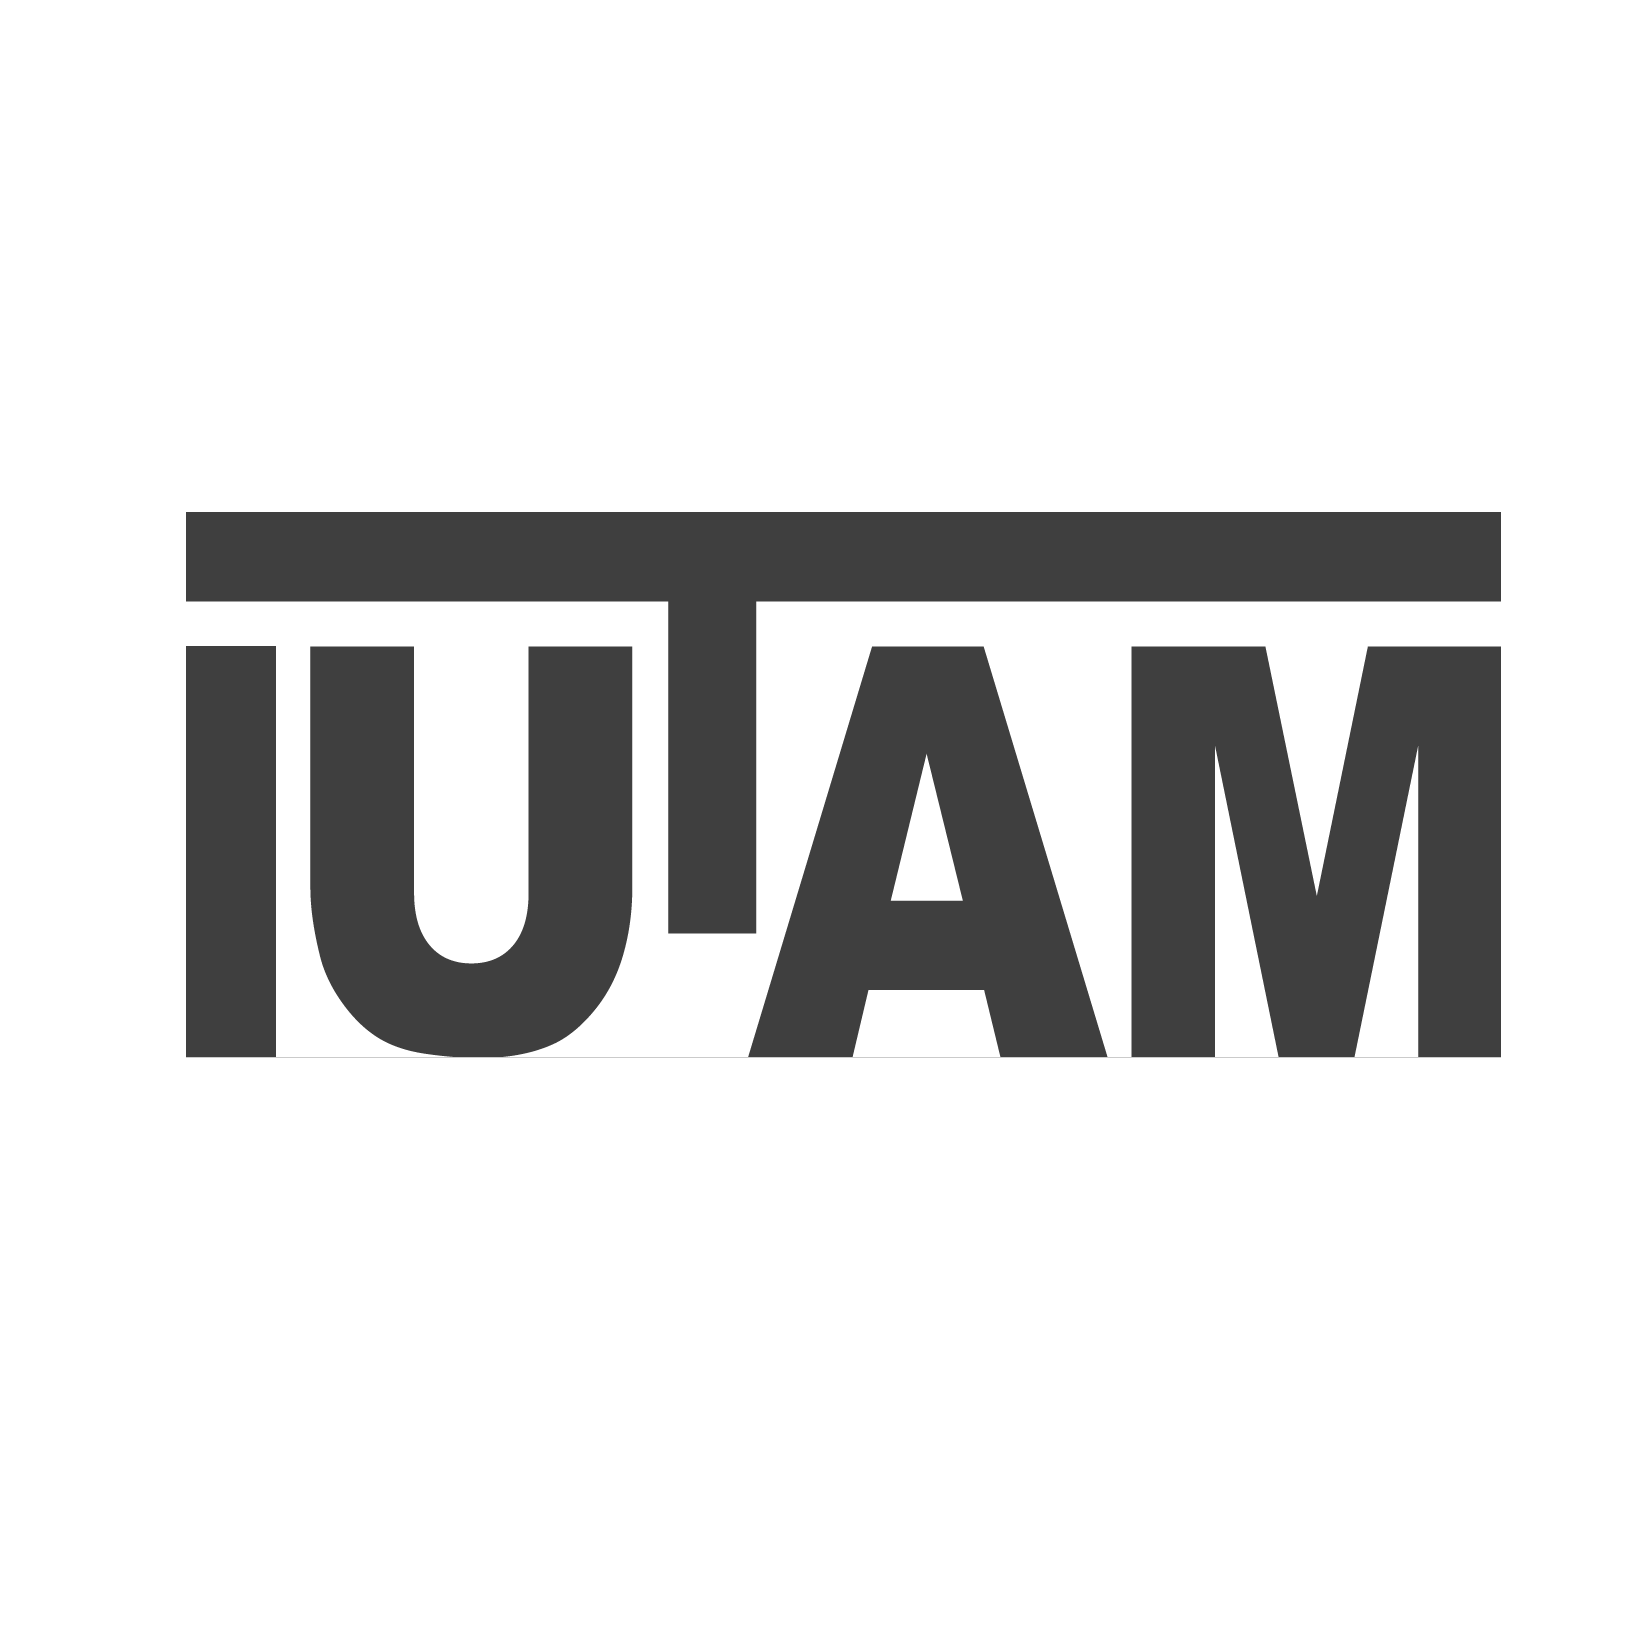 The word IUTAM typed in black